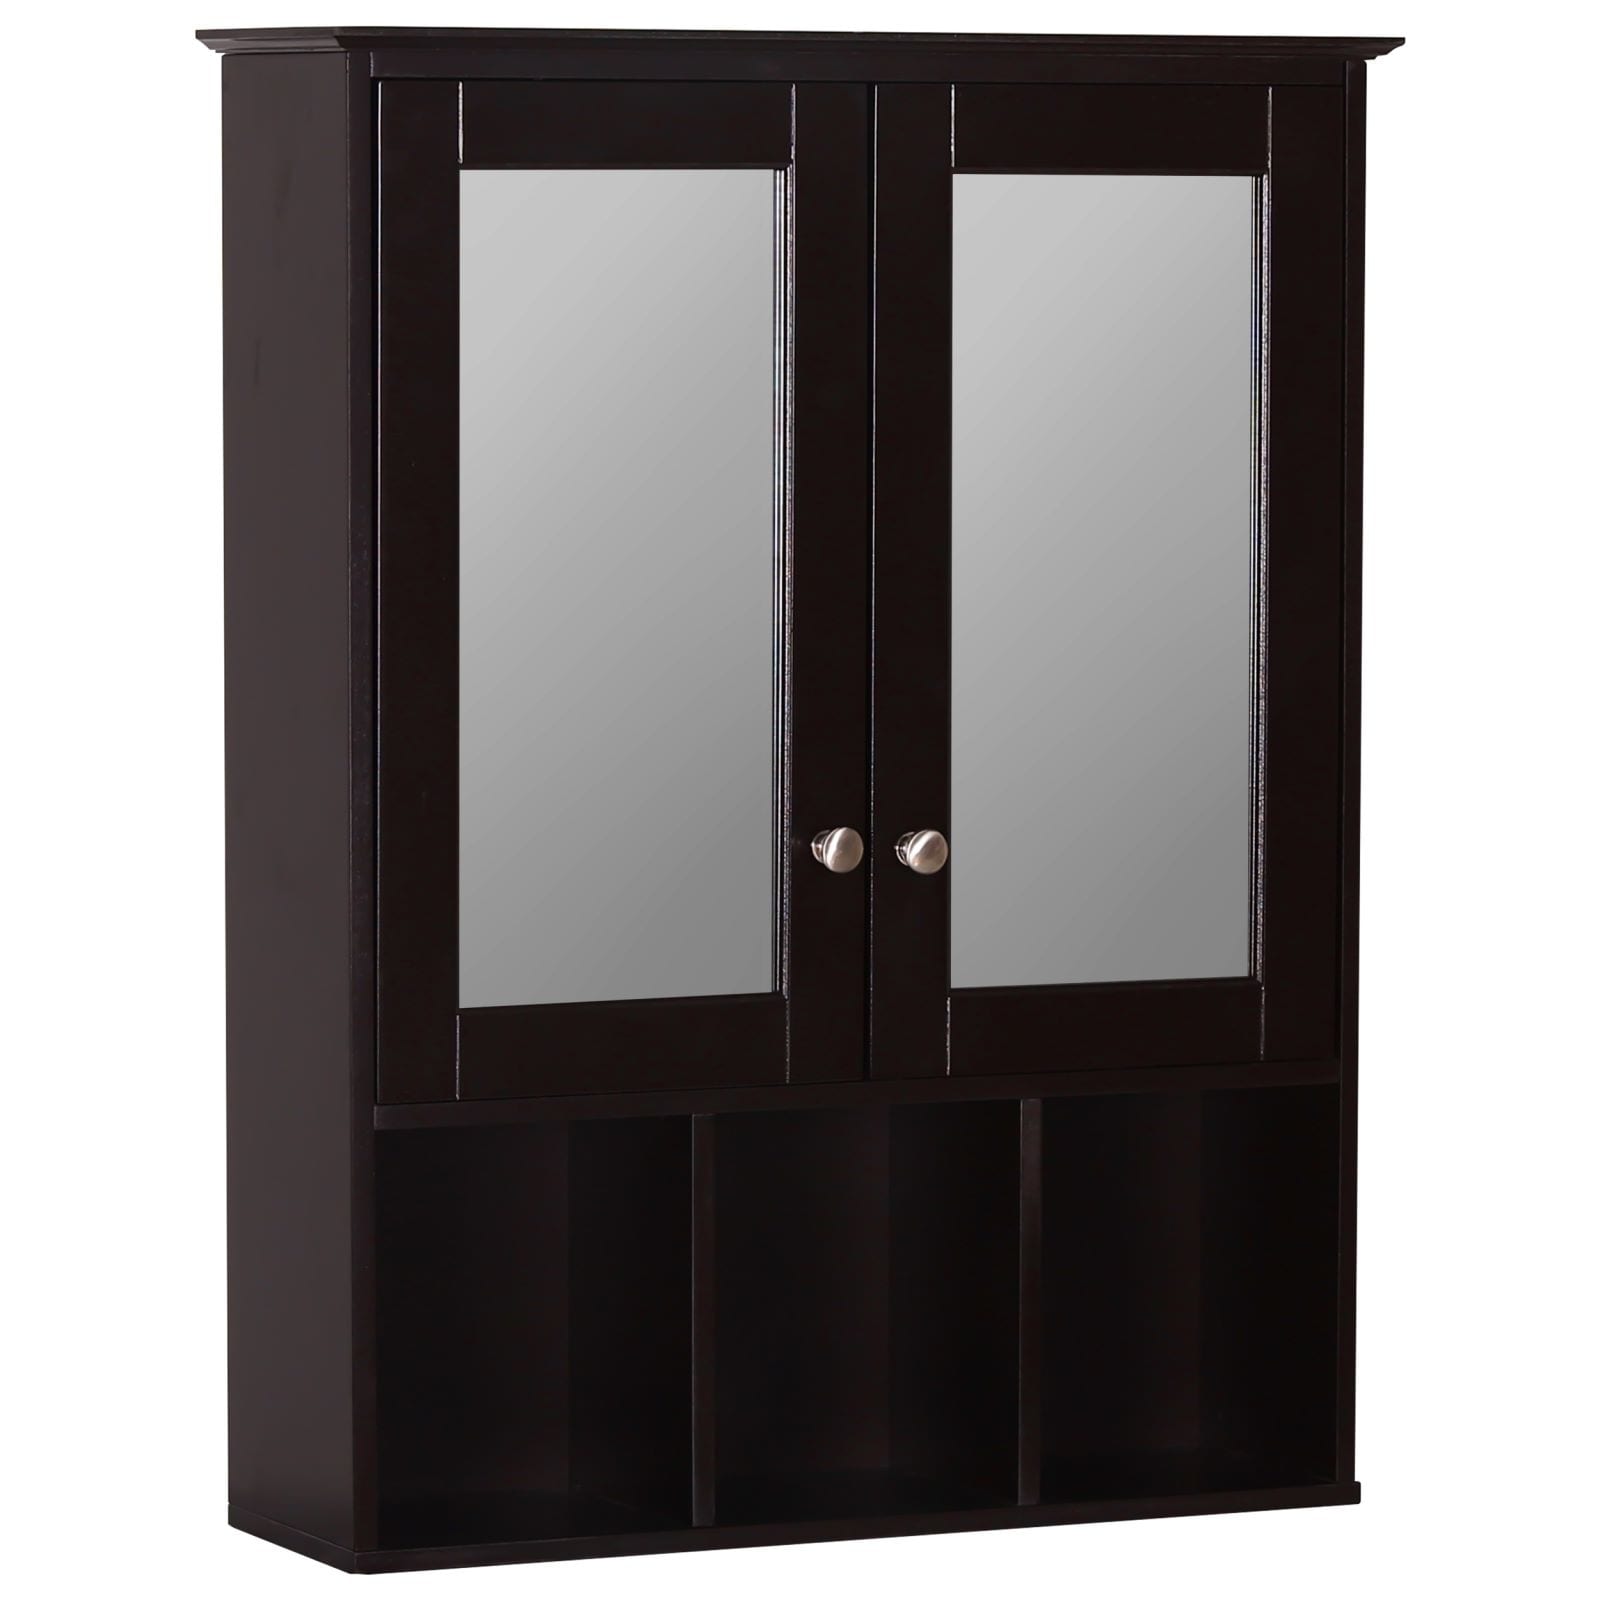  VANIRROR Black Bathroom Wall Cabinet 23x29 inch Wooden